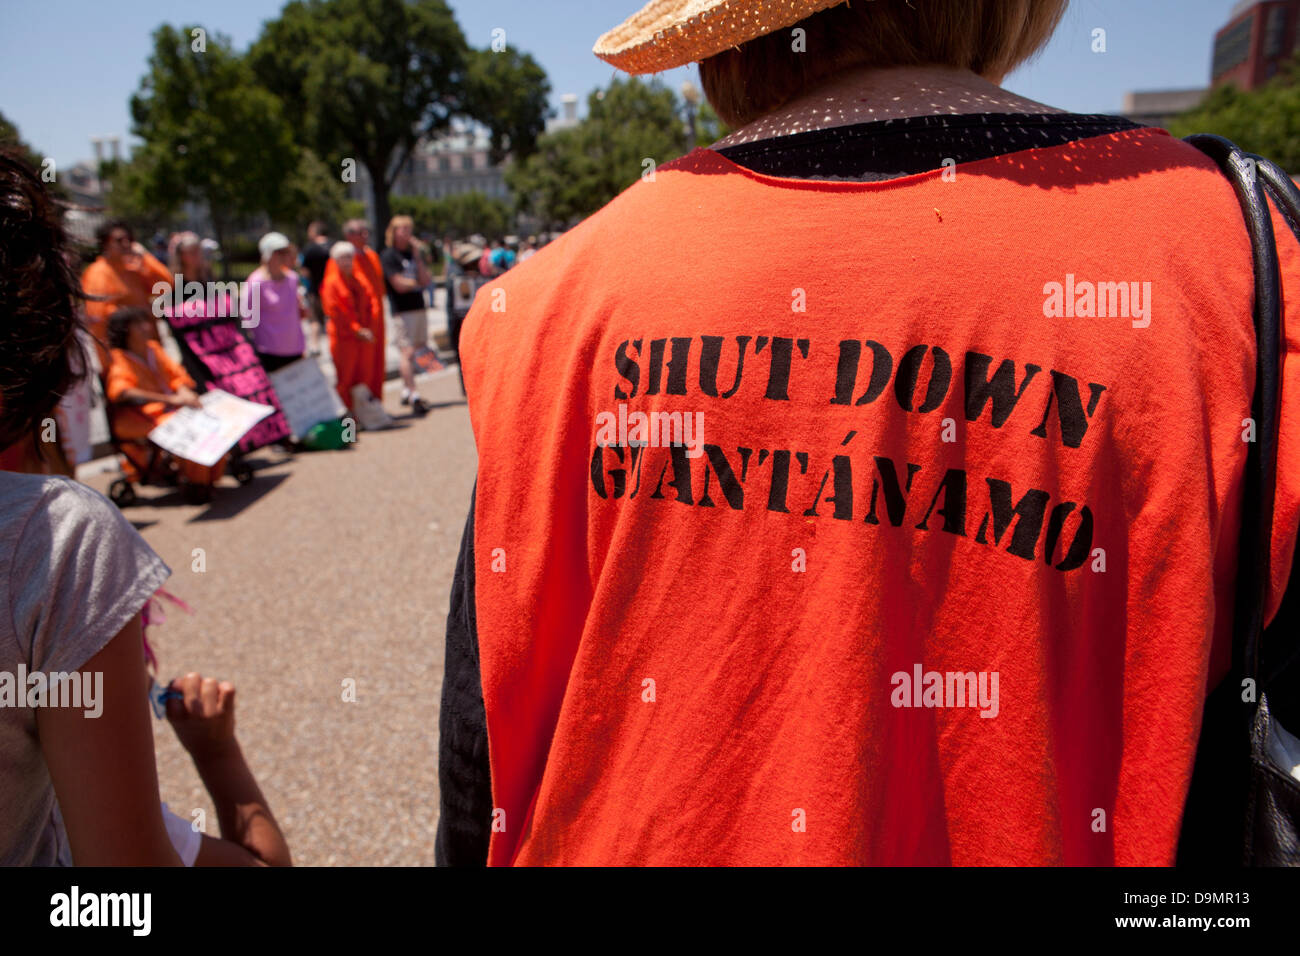 Freitag, Juni 21, 2013, Washington DC: Diane Wilson und Code Pink Guantanamo Bay Demonstranten protestieren Stockfoto